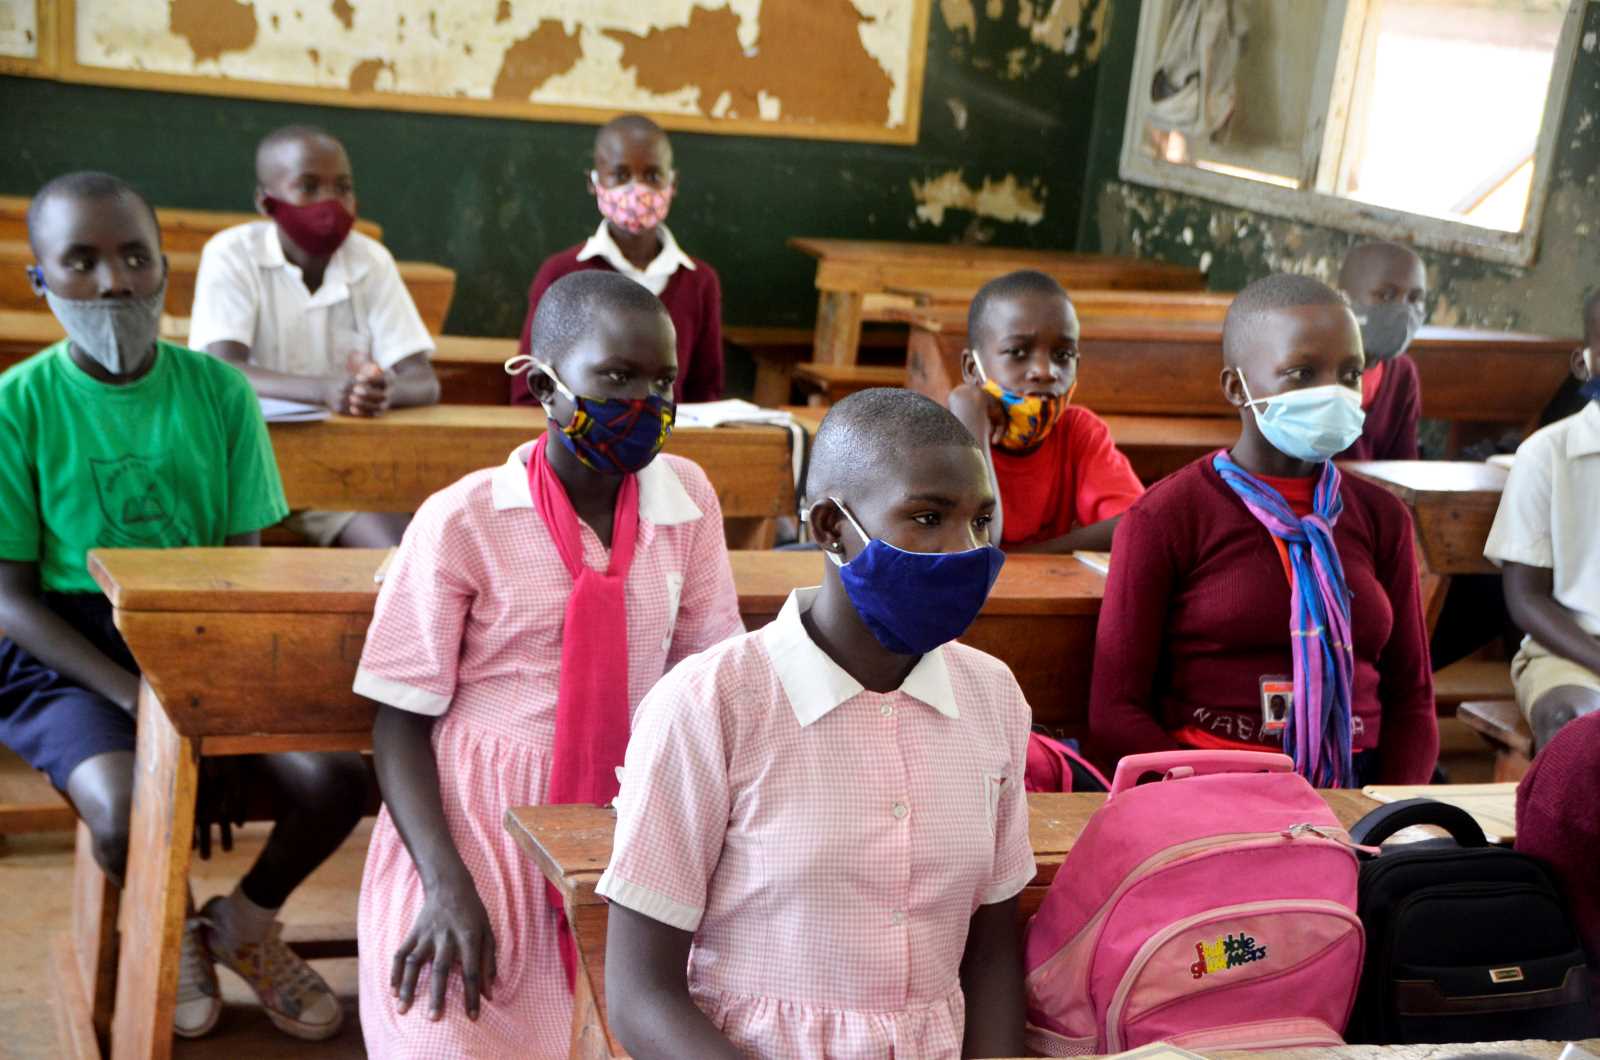 Pupils in Kampala, Uganda’s capital.